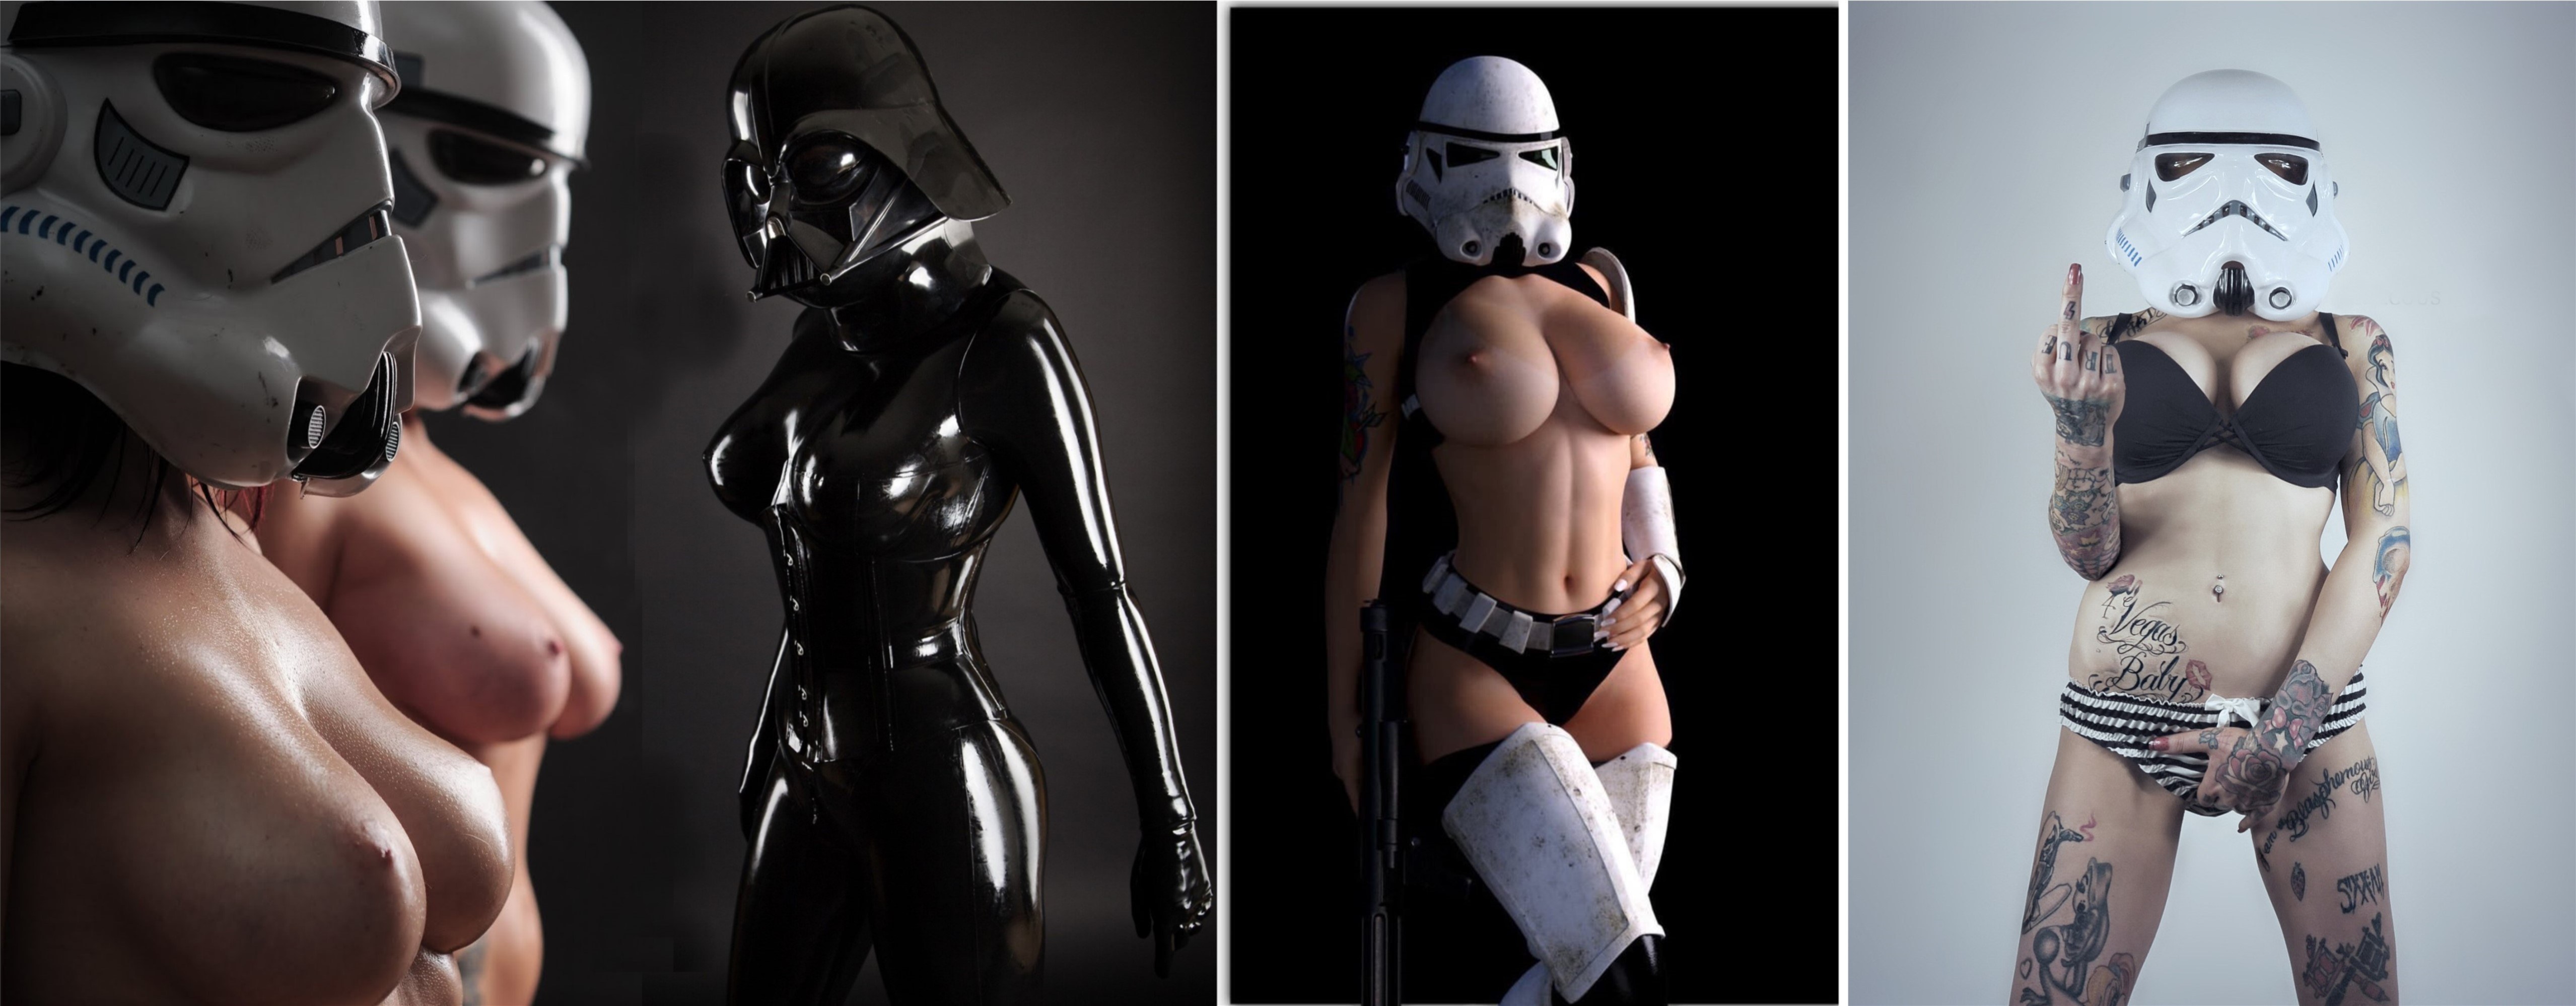 1647083171_35-xphoto-name-p-female-stormtrooper-porn-38.jpg